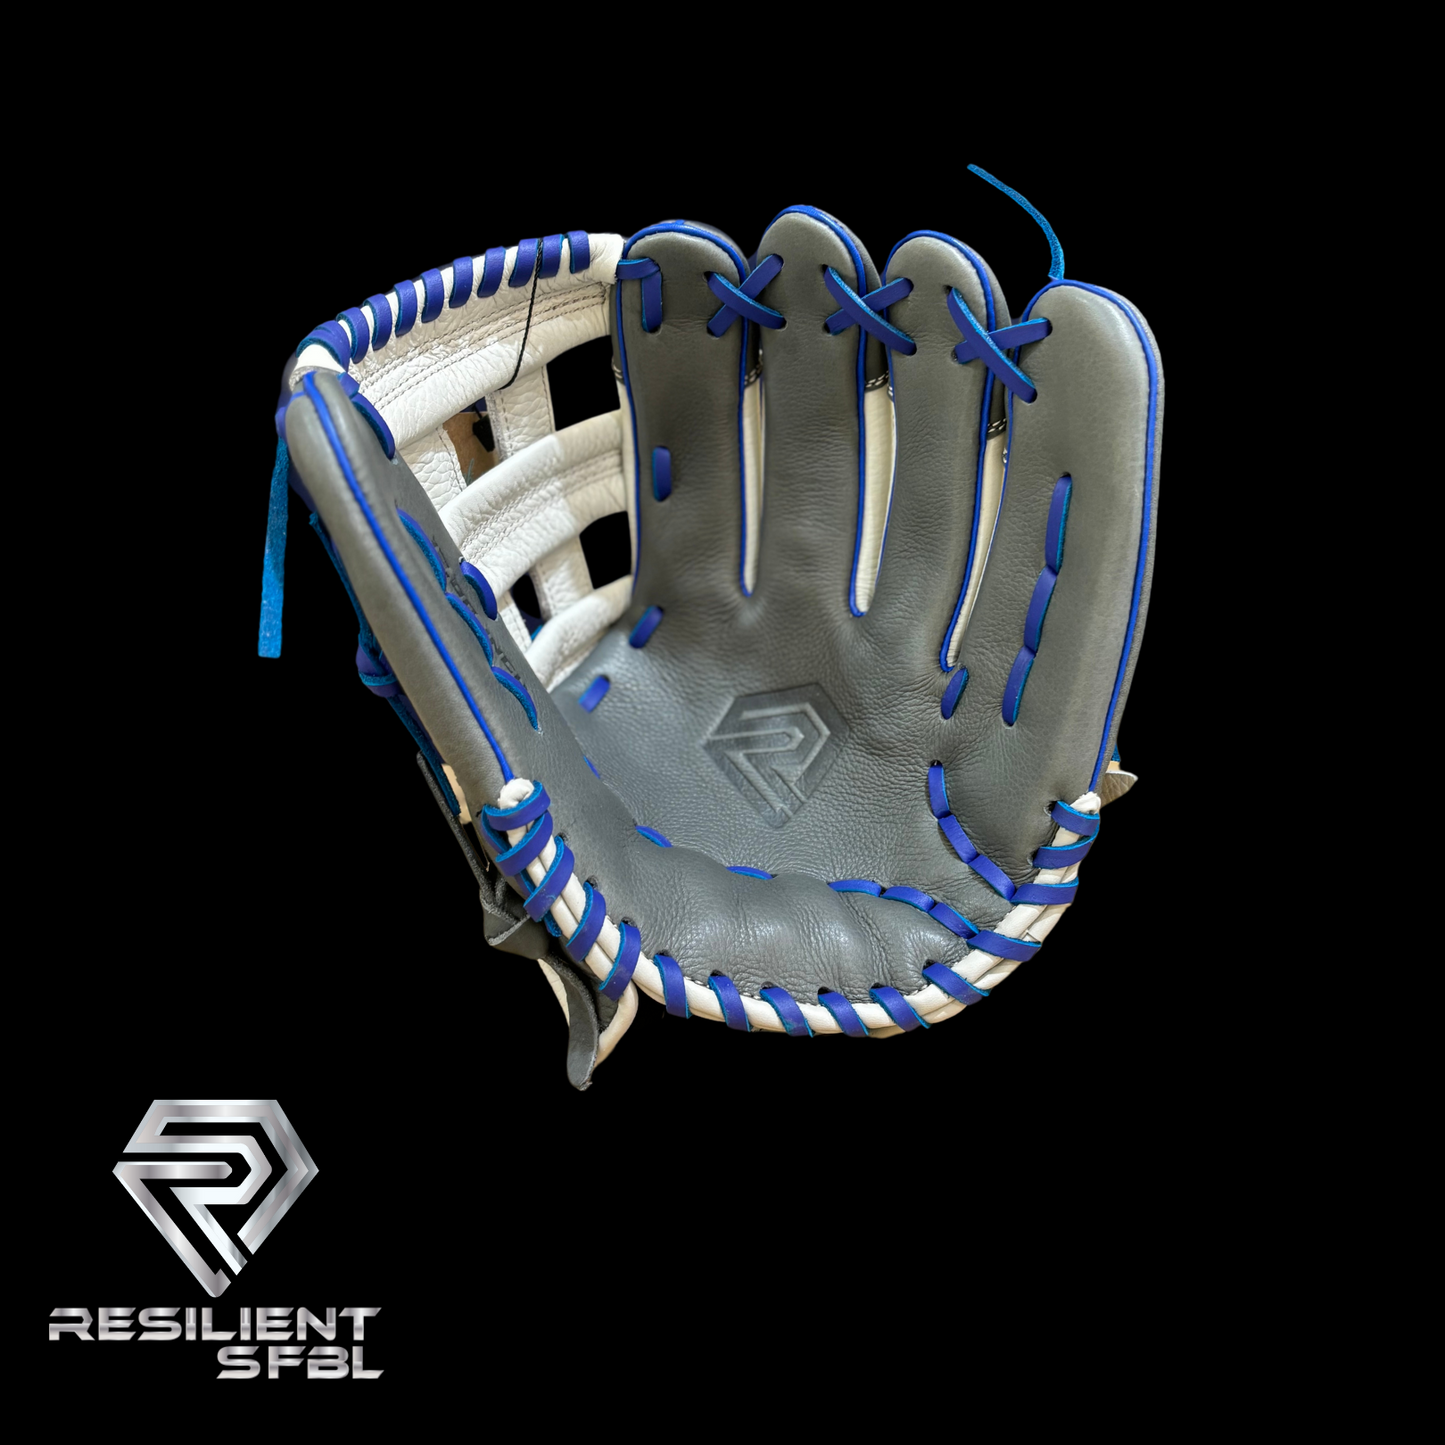 Youth Fastpitch Softball Glove  - Subzero with I-Web